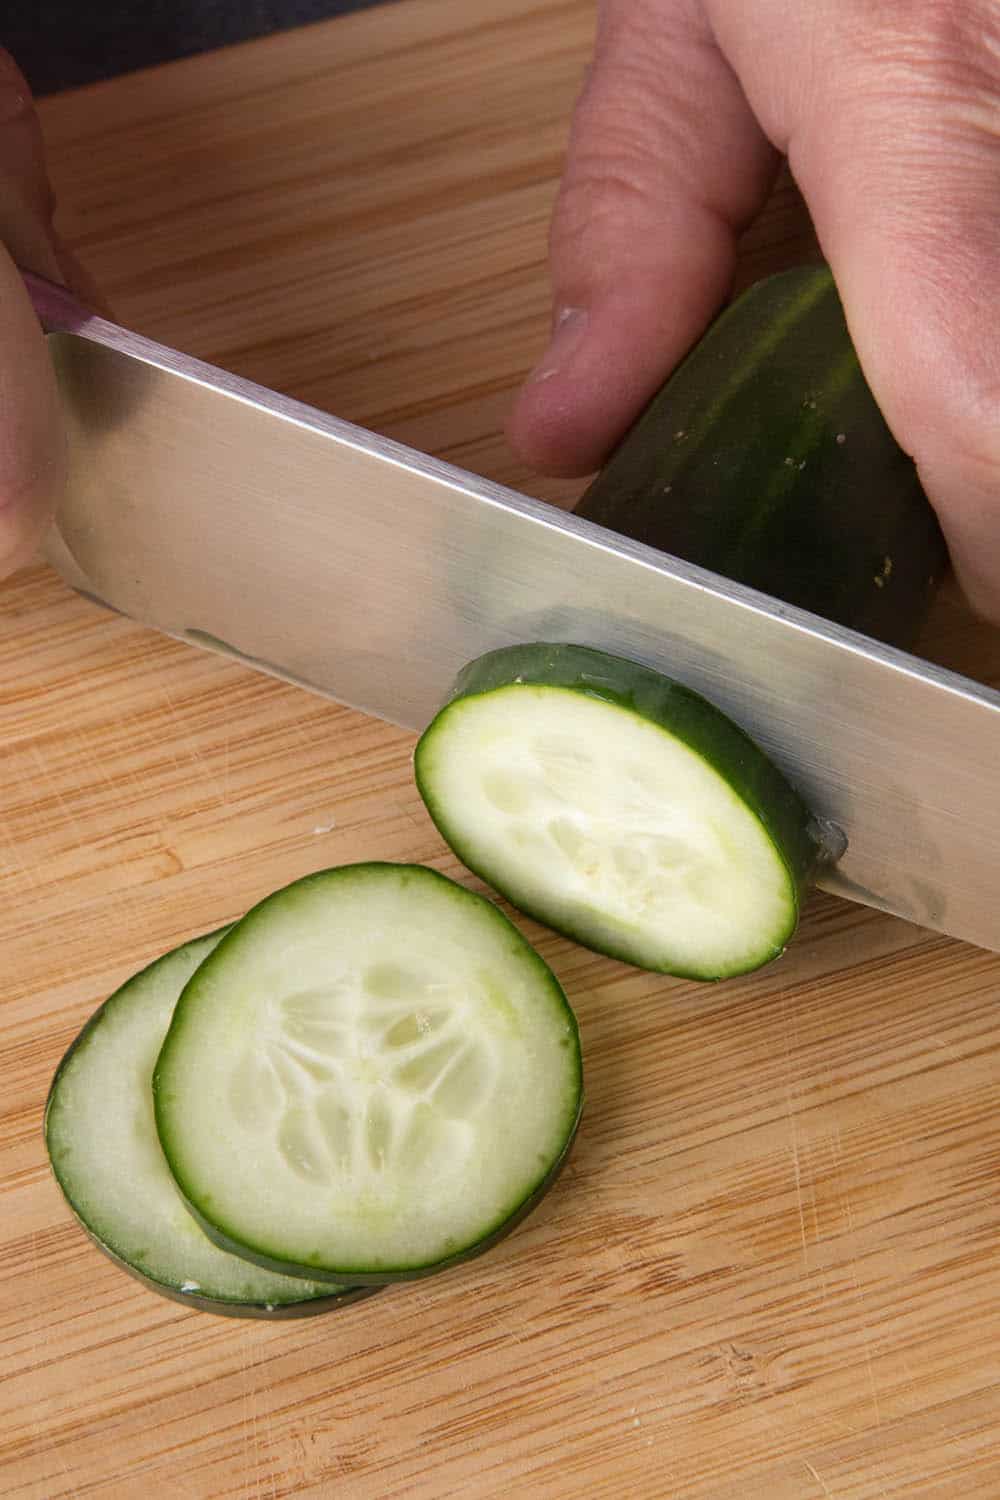 Slicing the cucumbers